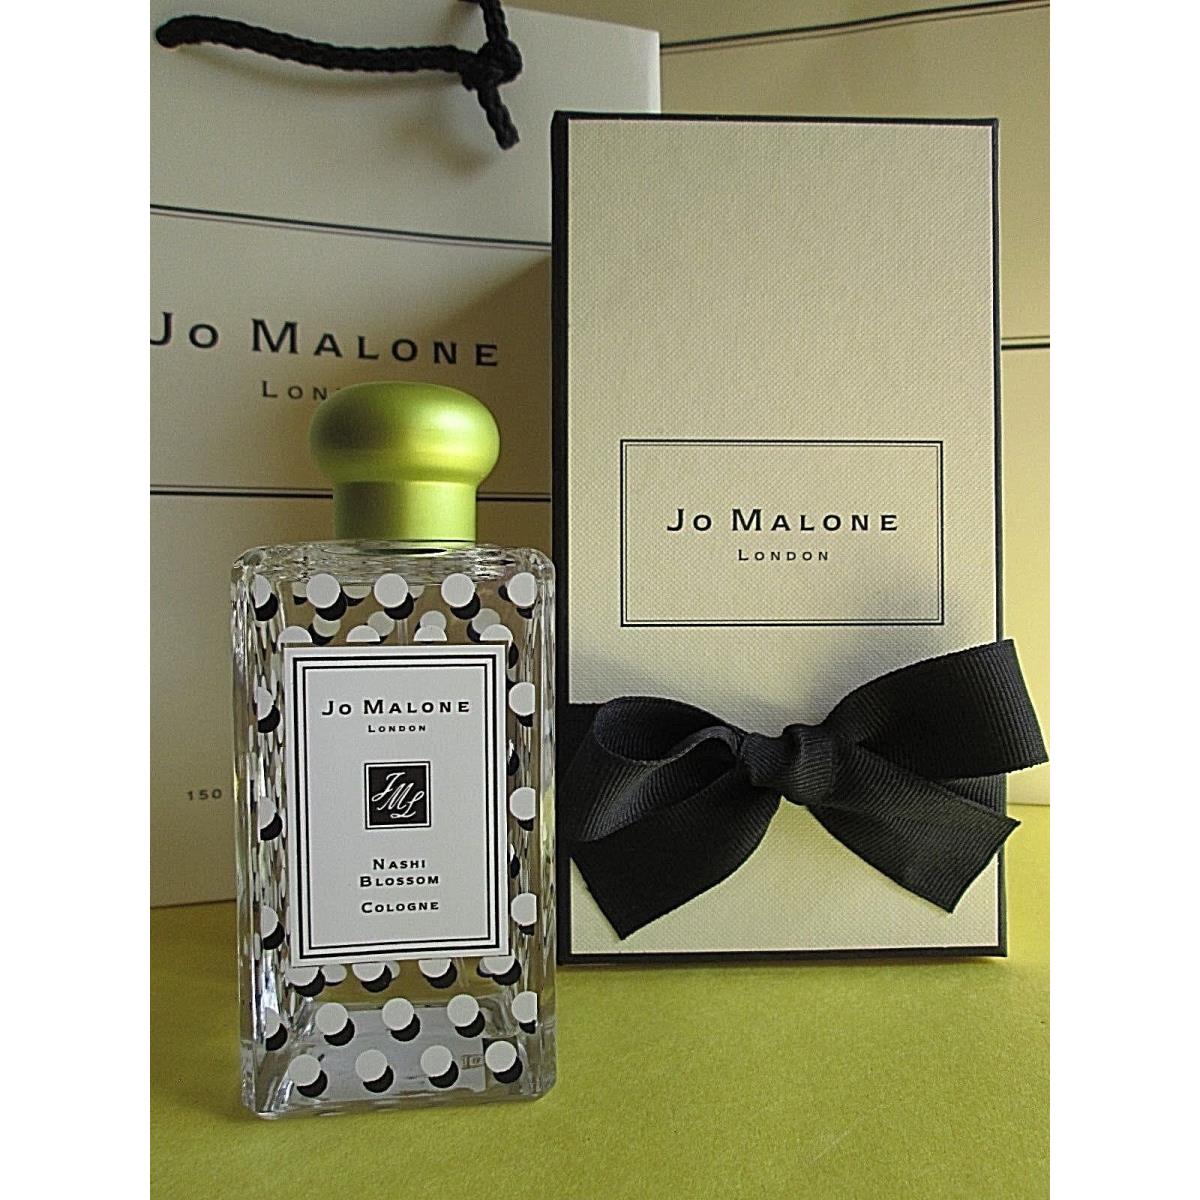 Nashi Blossom JO Malone Cologne First Edition Limited Perfume 3.4 OZ 100 ML